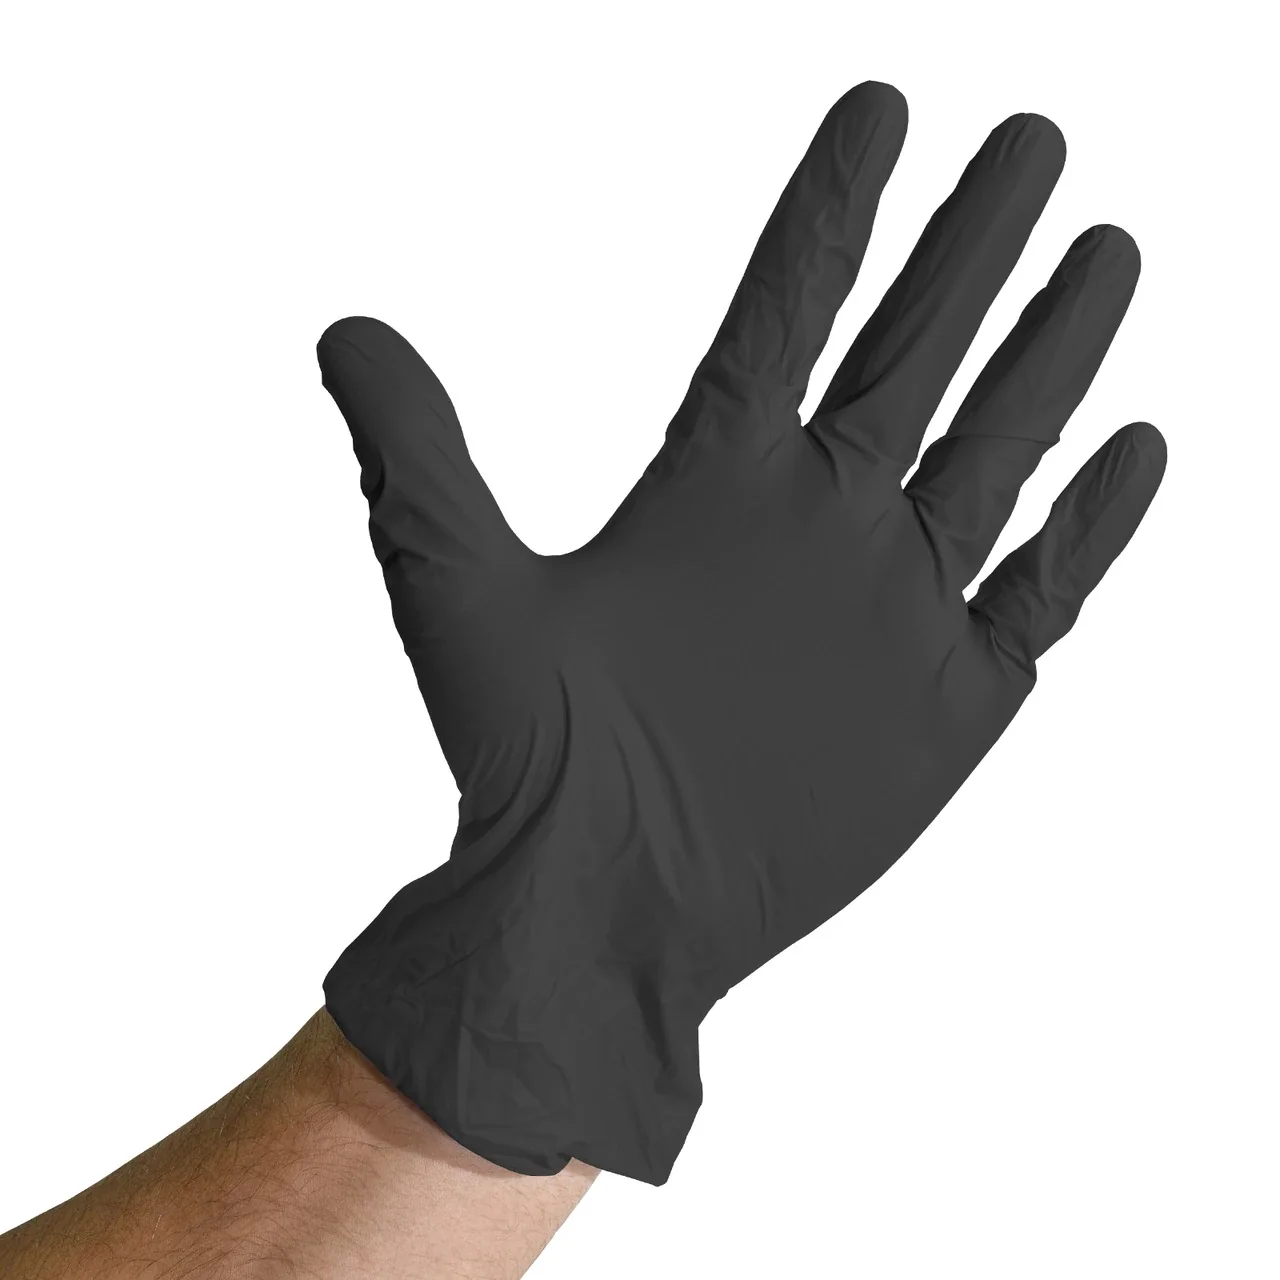 
100pcs/box Powder-free Glove Cleaning Disposable Blue Black Synthetic Nitrile Pvc Blend Glove 